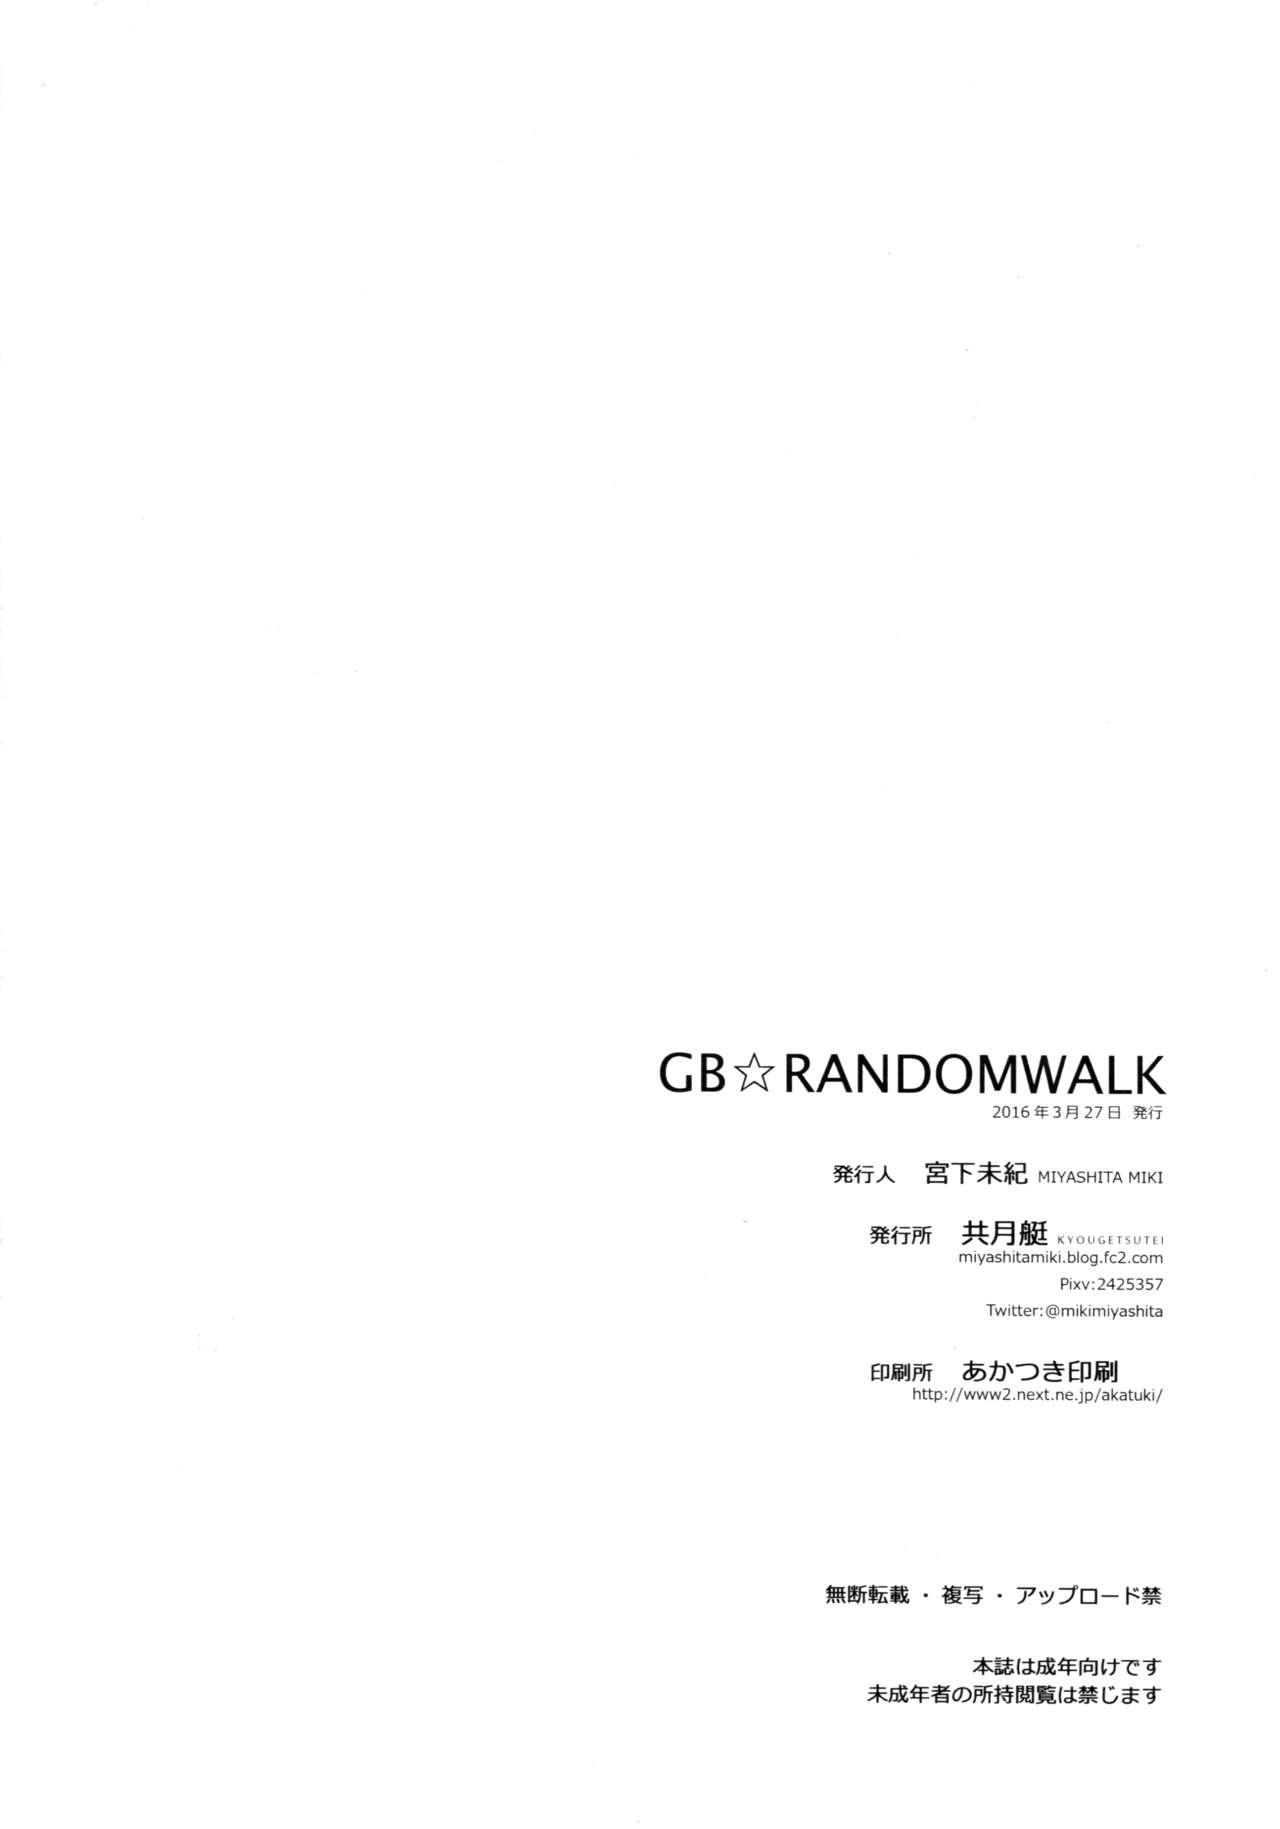 GB-RANDOMWALK 16